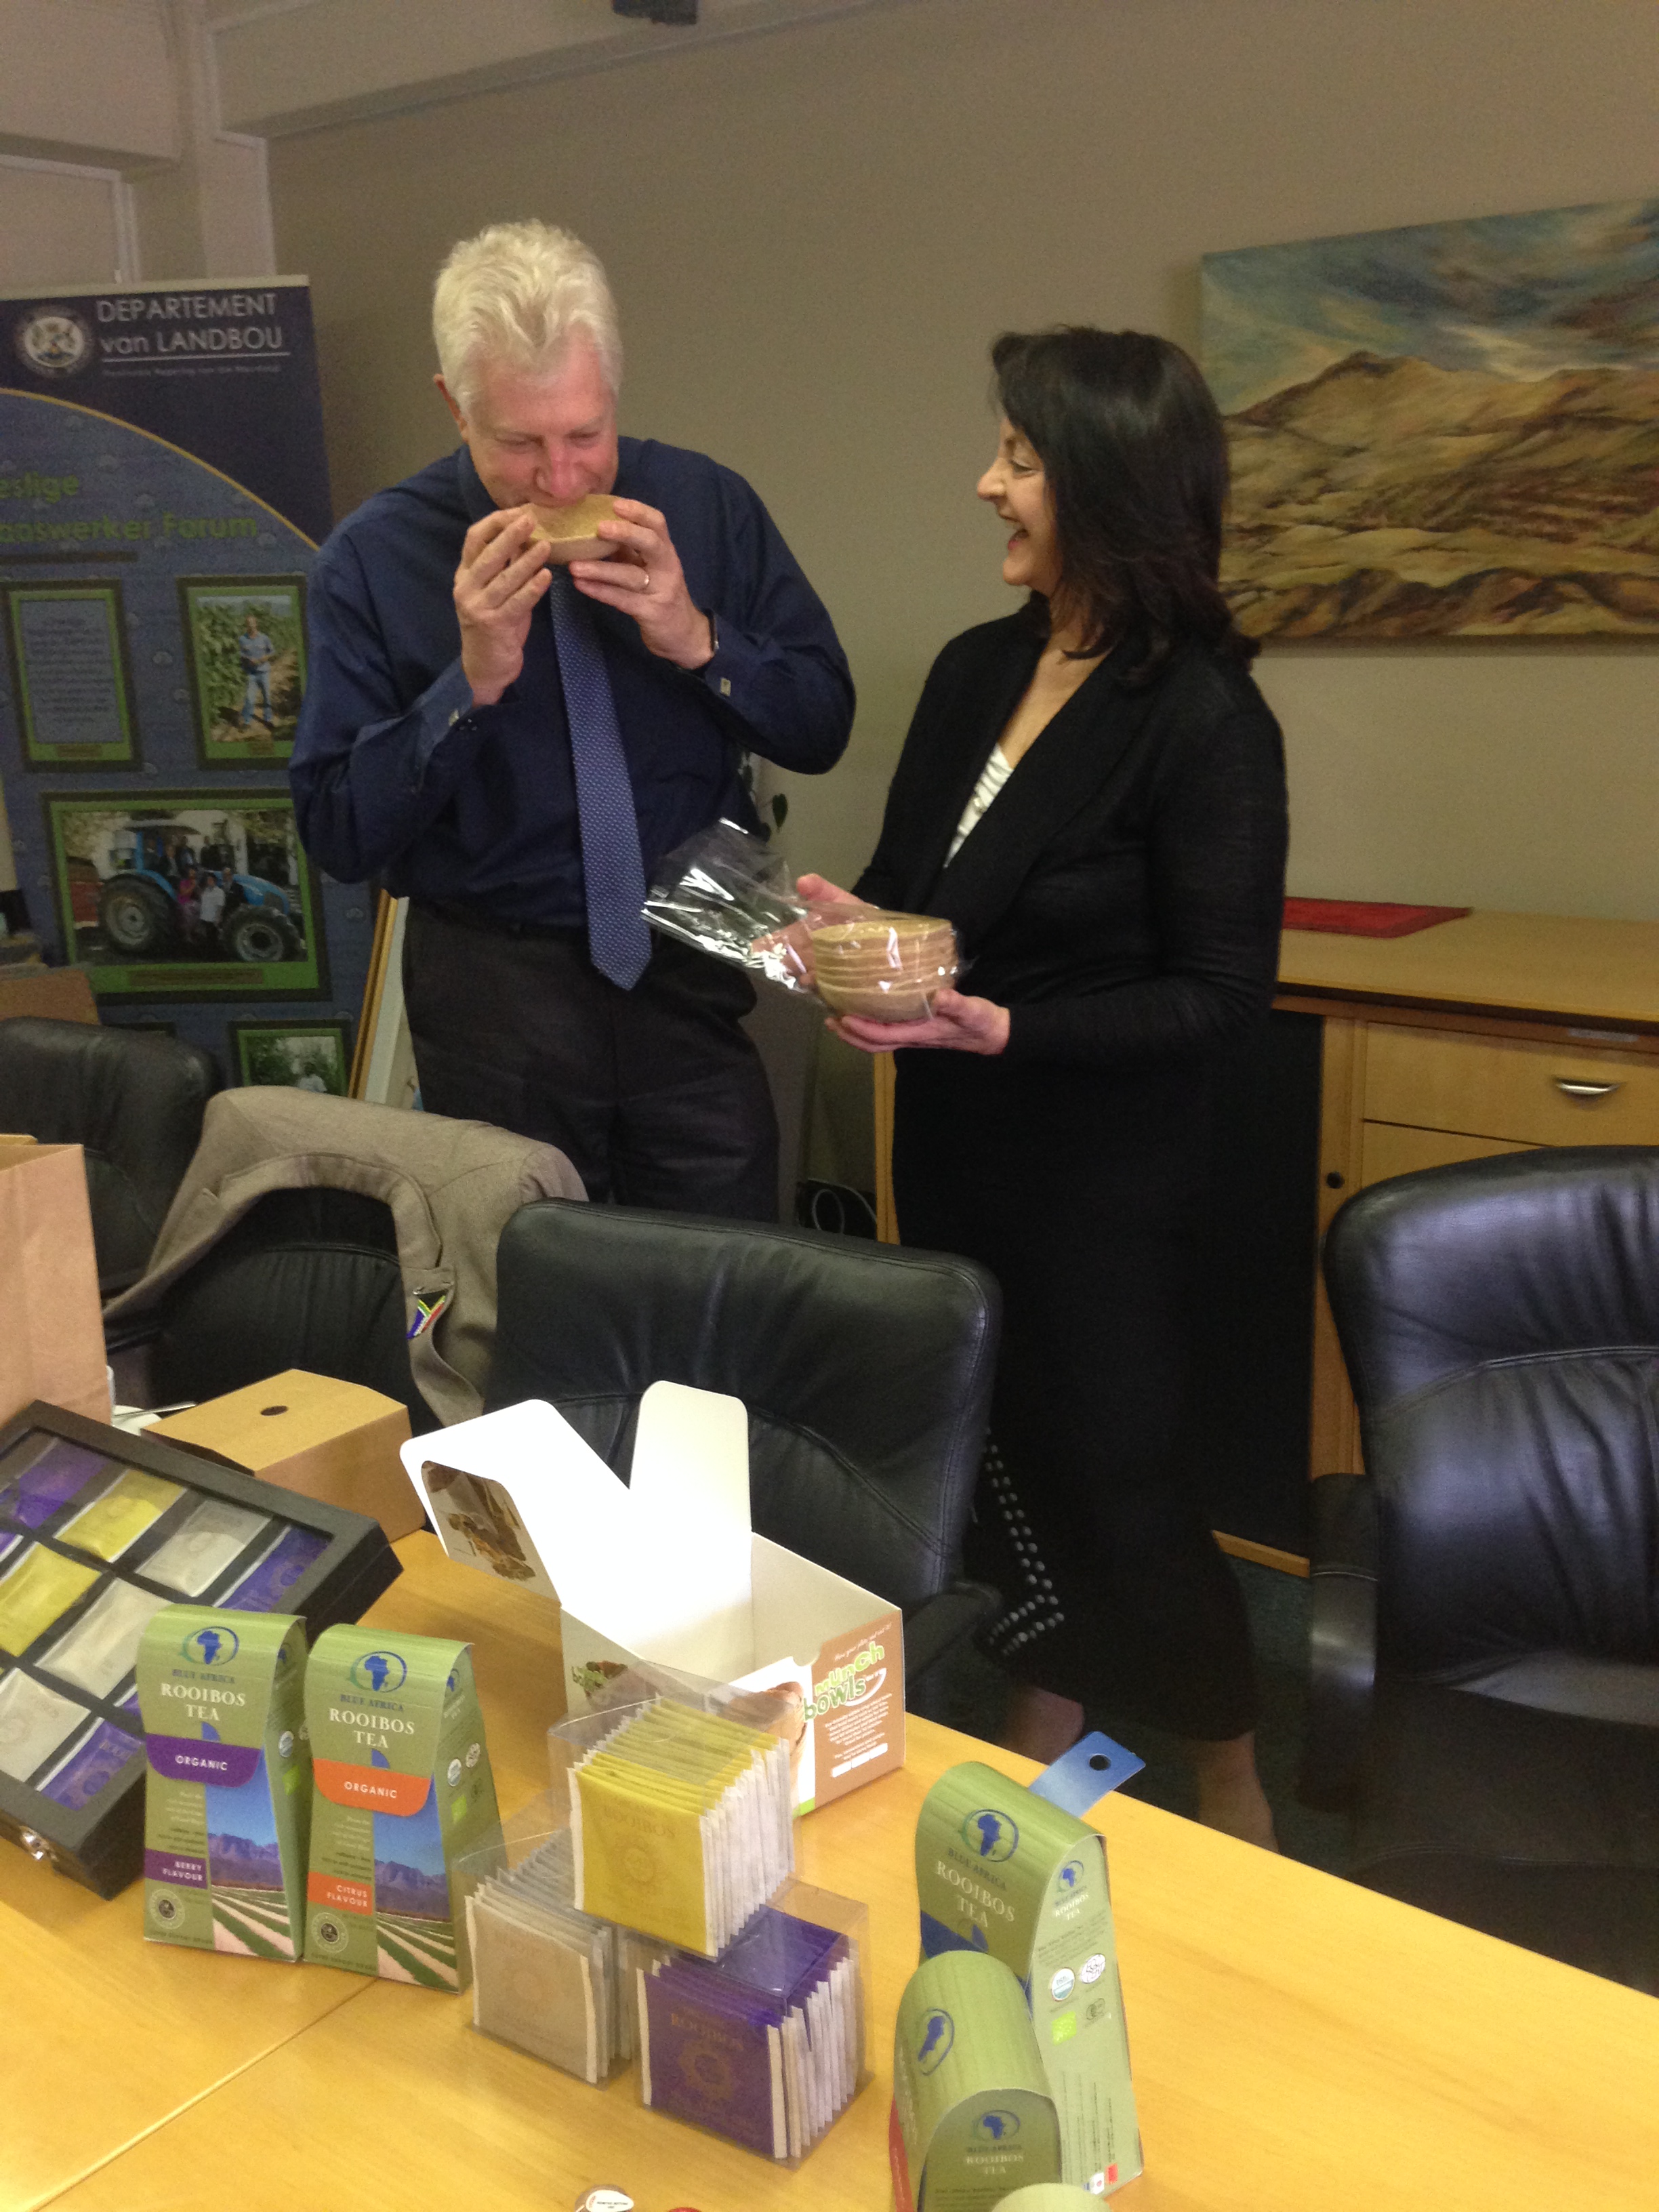 Minister Winde tastes Munch Bowls edible bowls while company founder Georgina de Kock looks on.